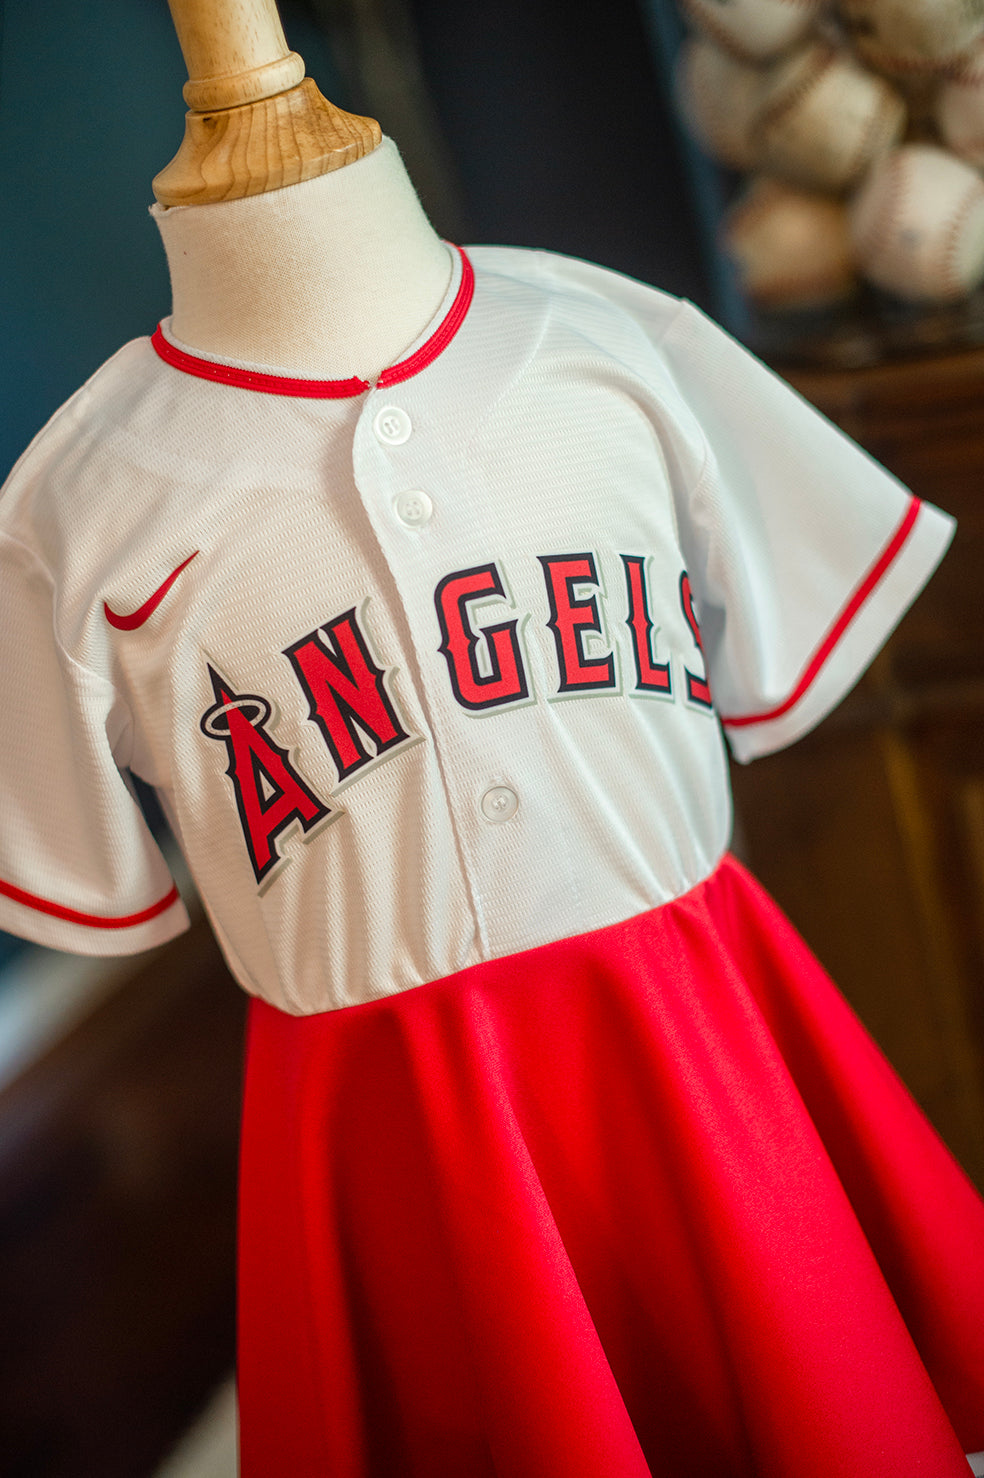 Anaheim Angels Fan Dress - Girls